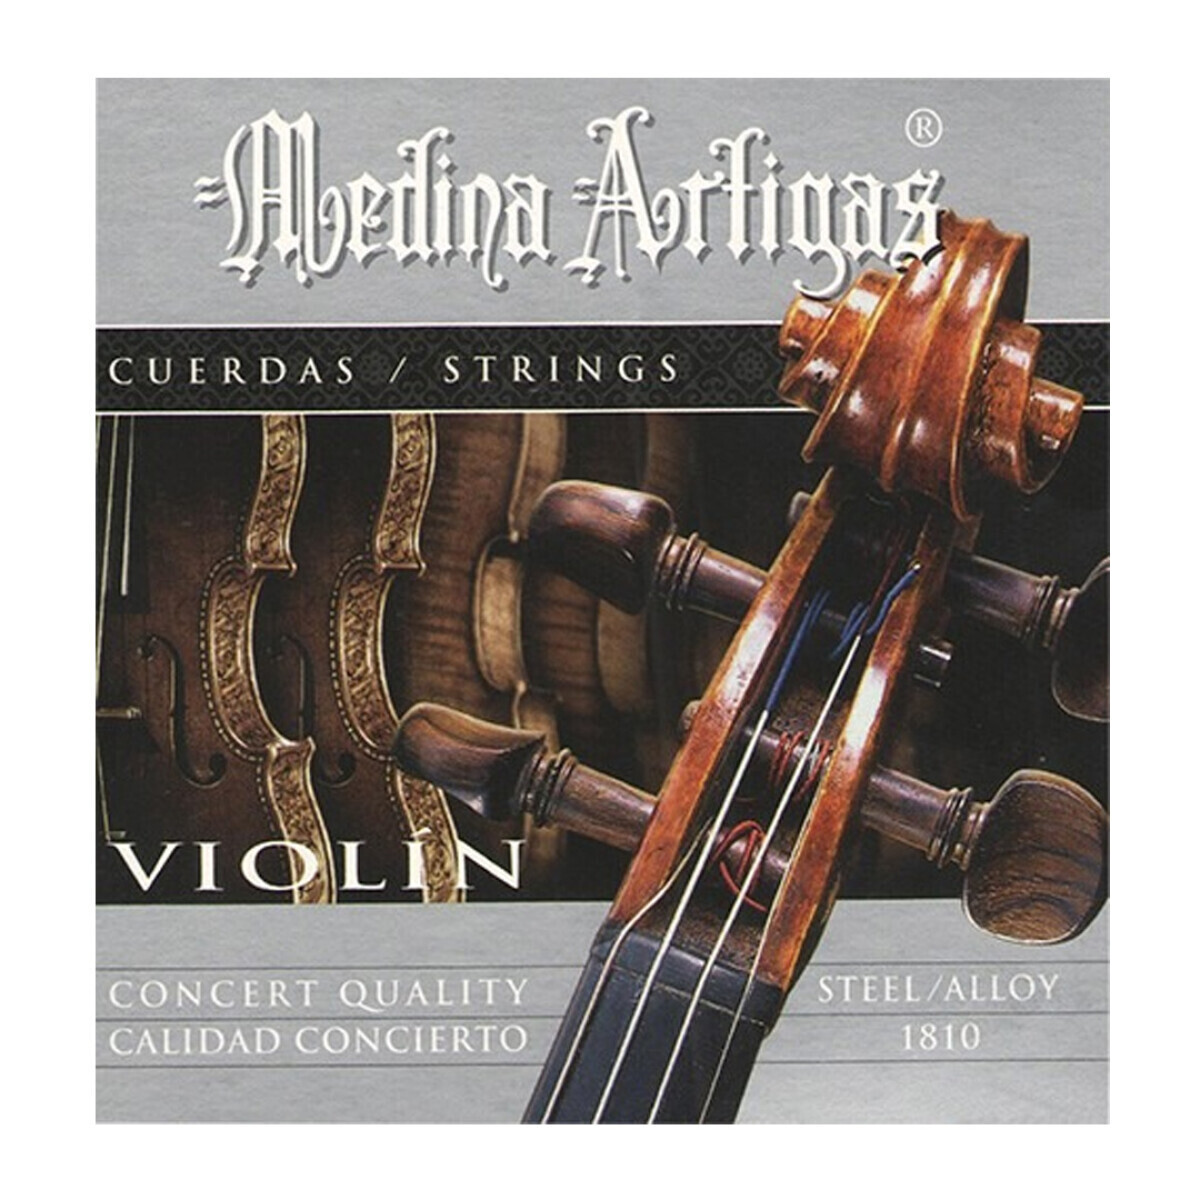 Cuerdas Violín Medina Artigas 1810